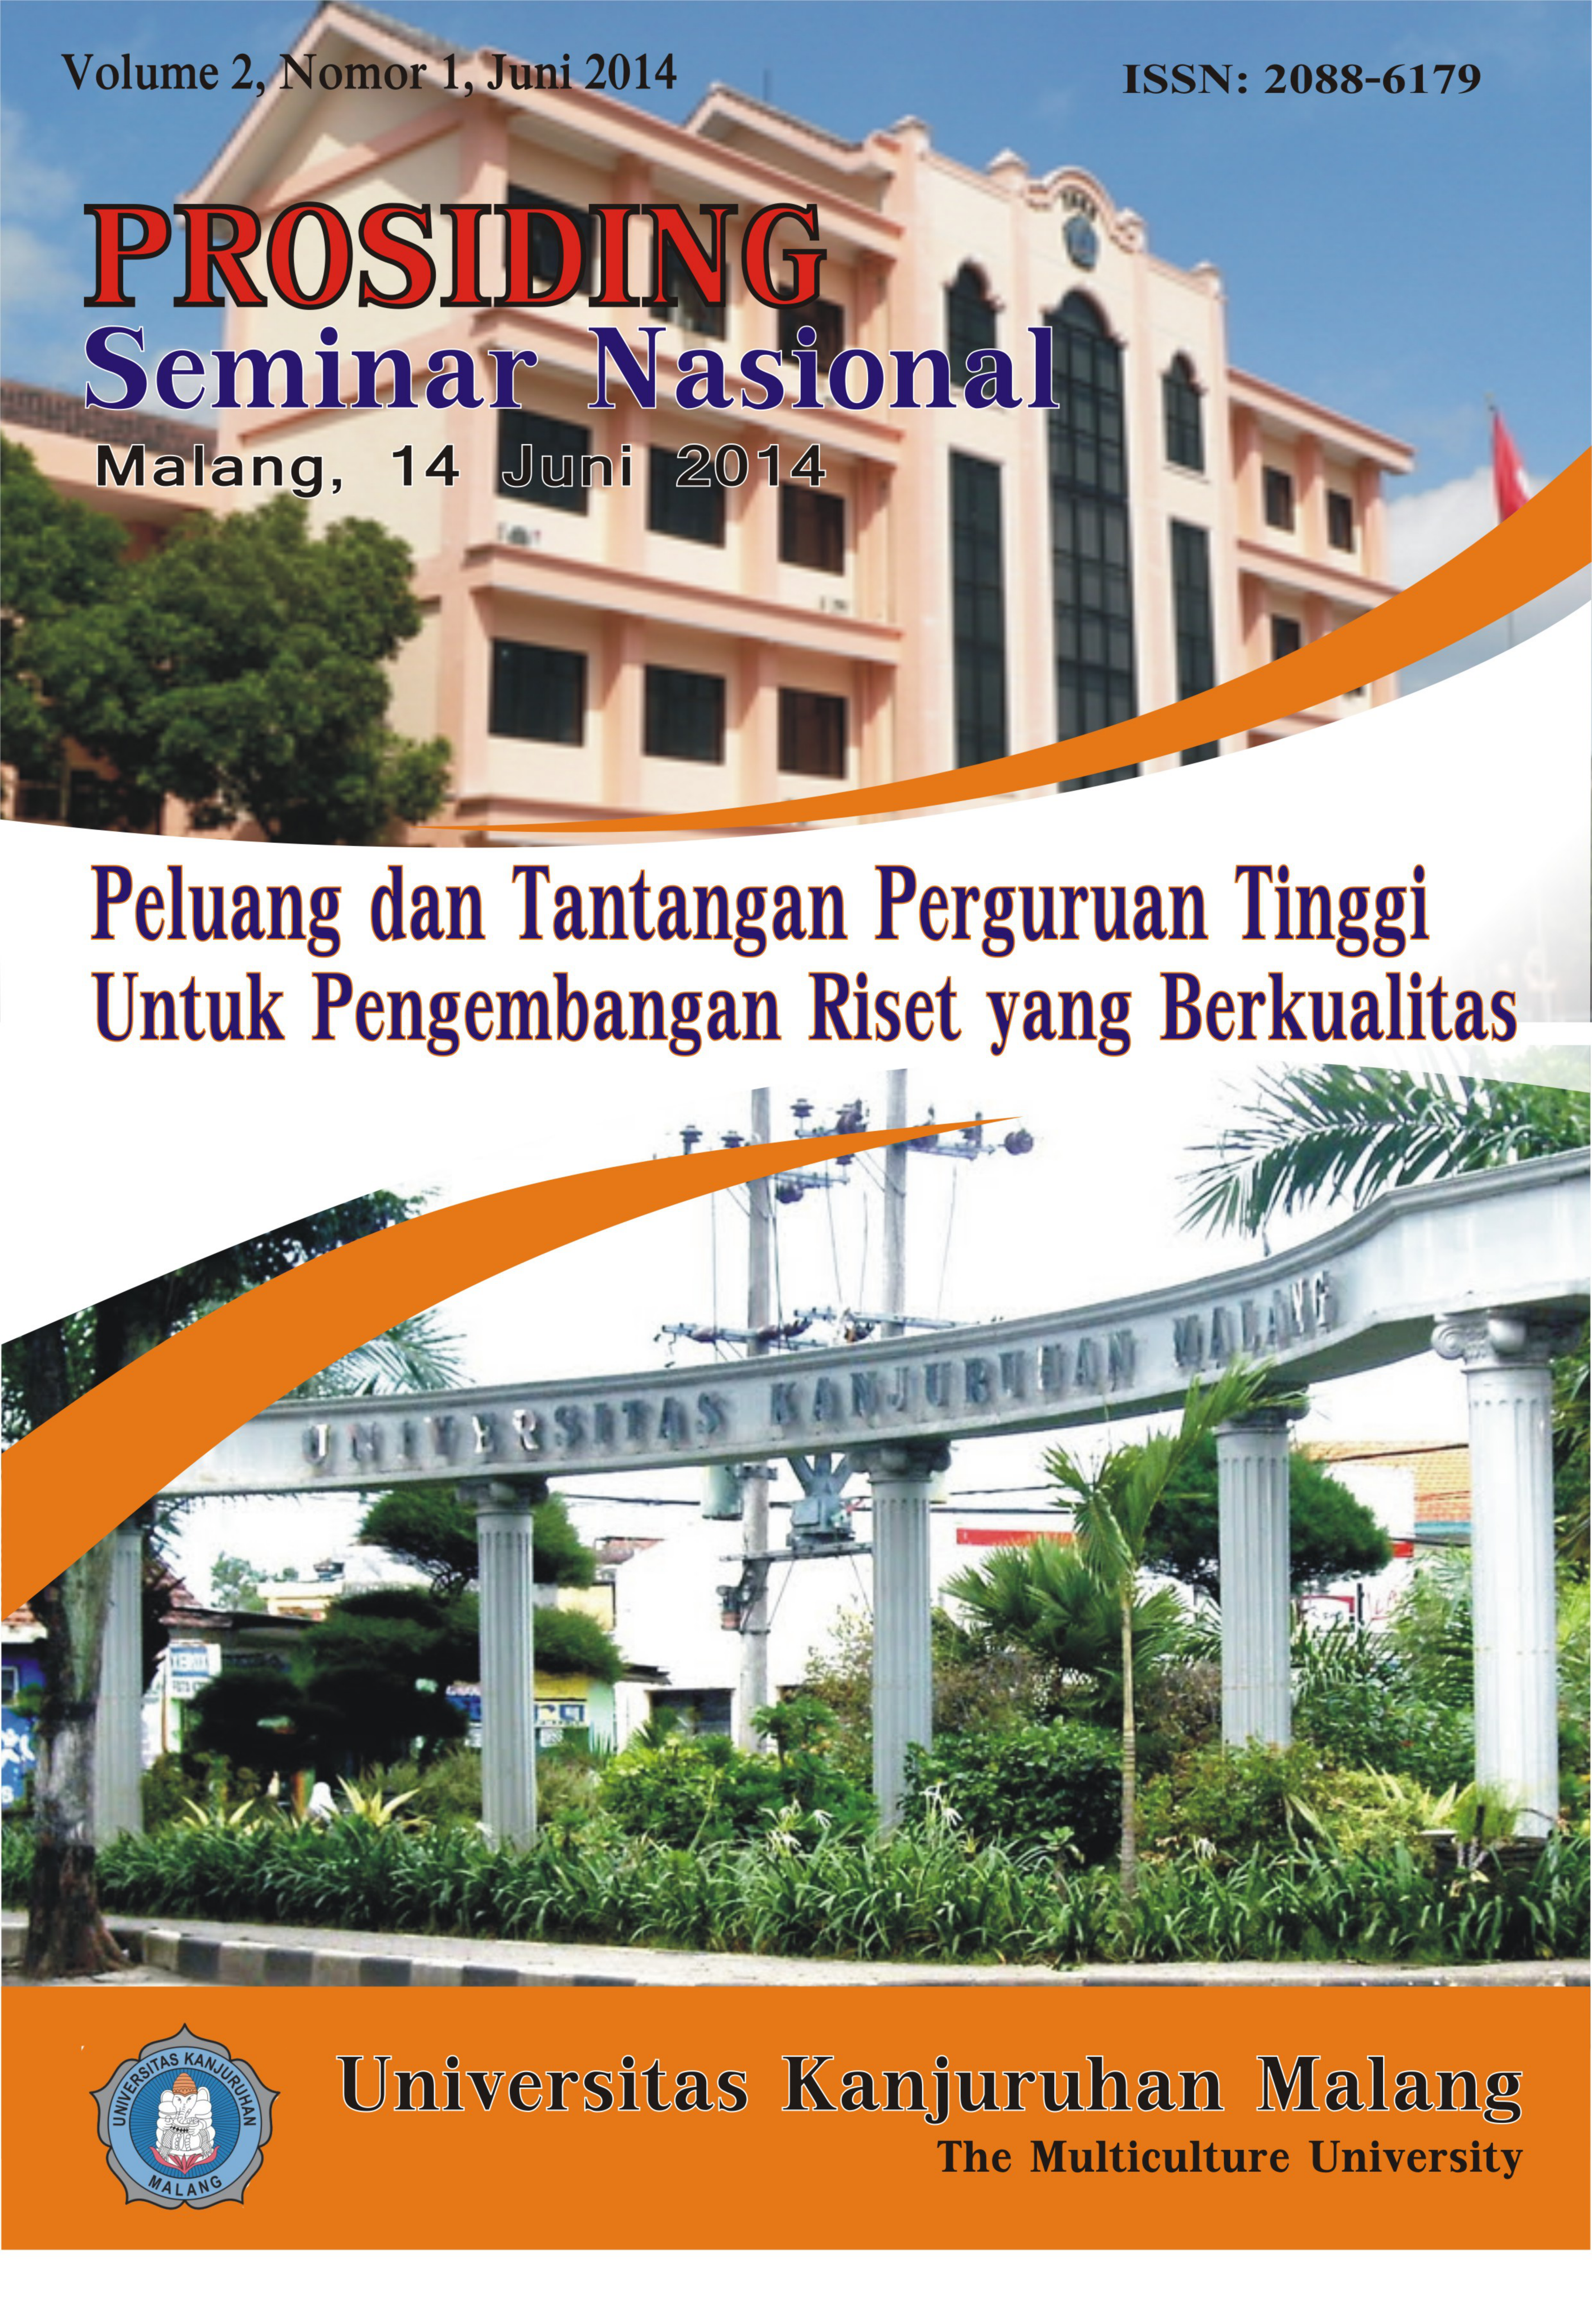 Repository UNIKAMA Universitas Kanjuruhan Malang